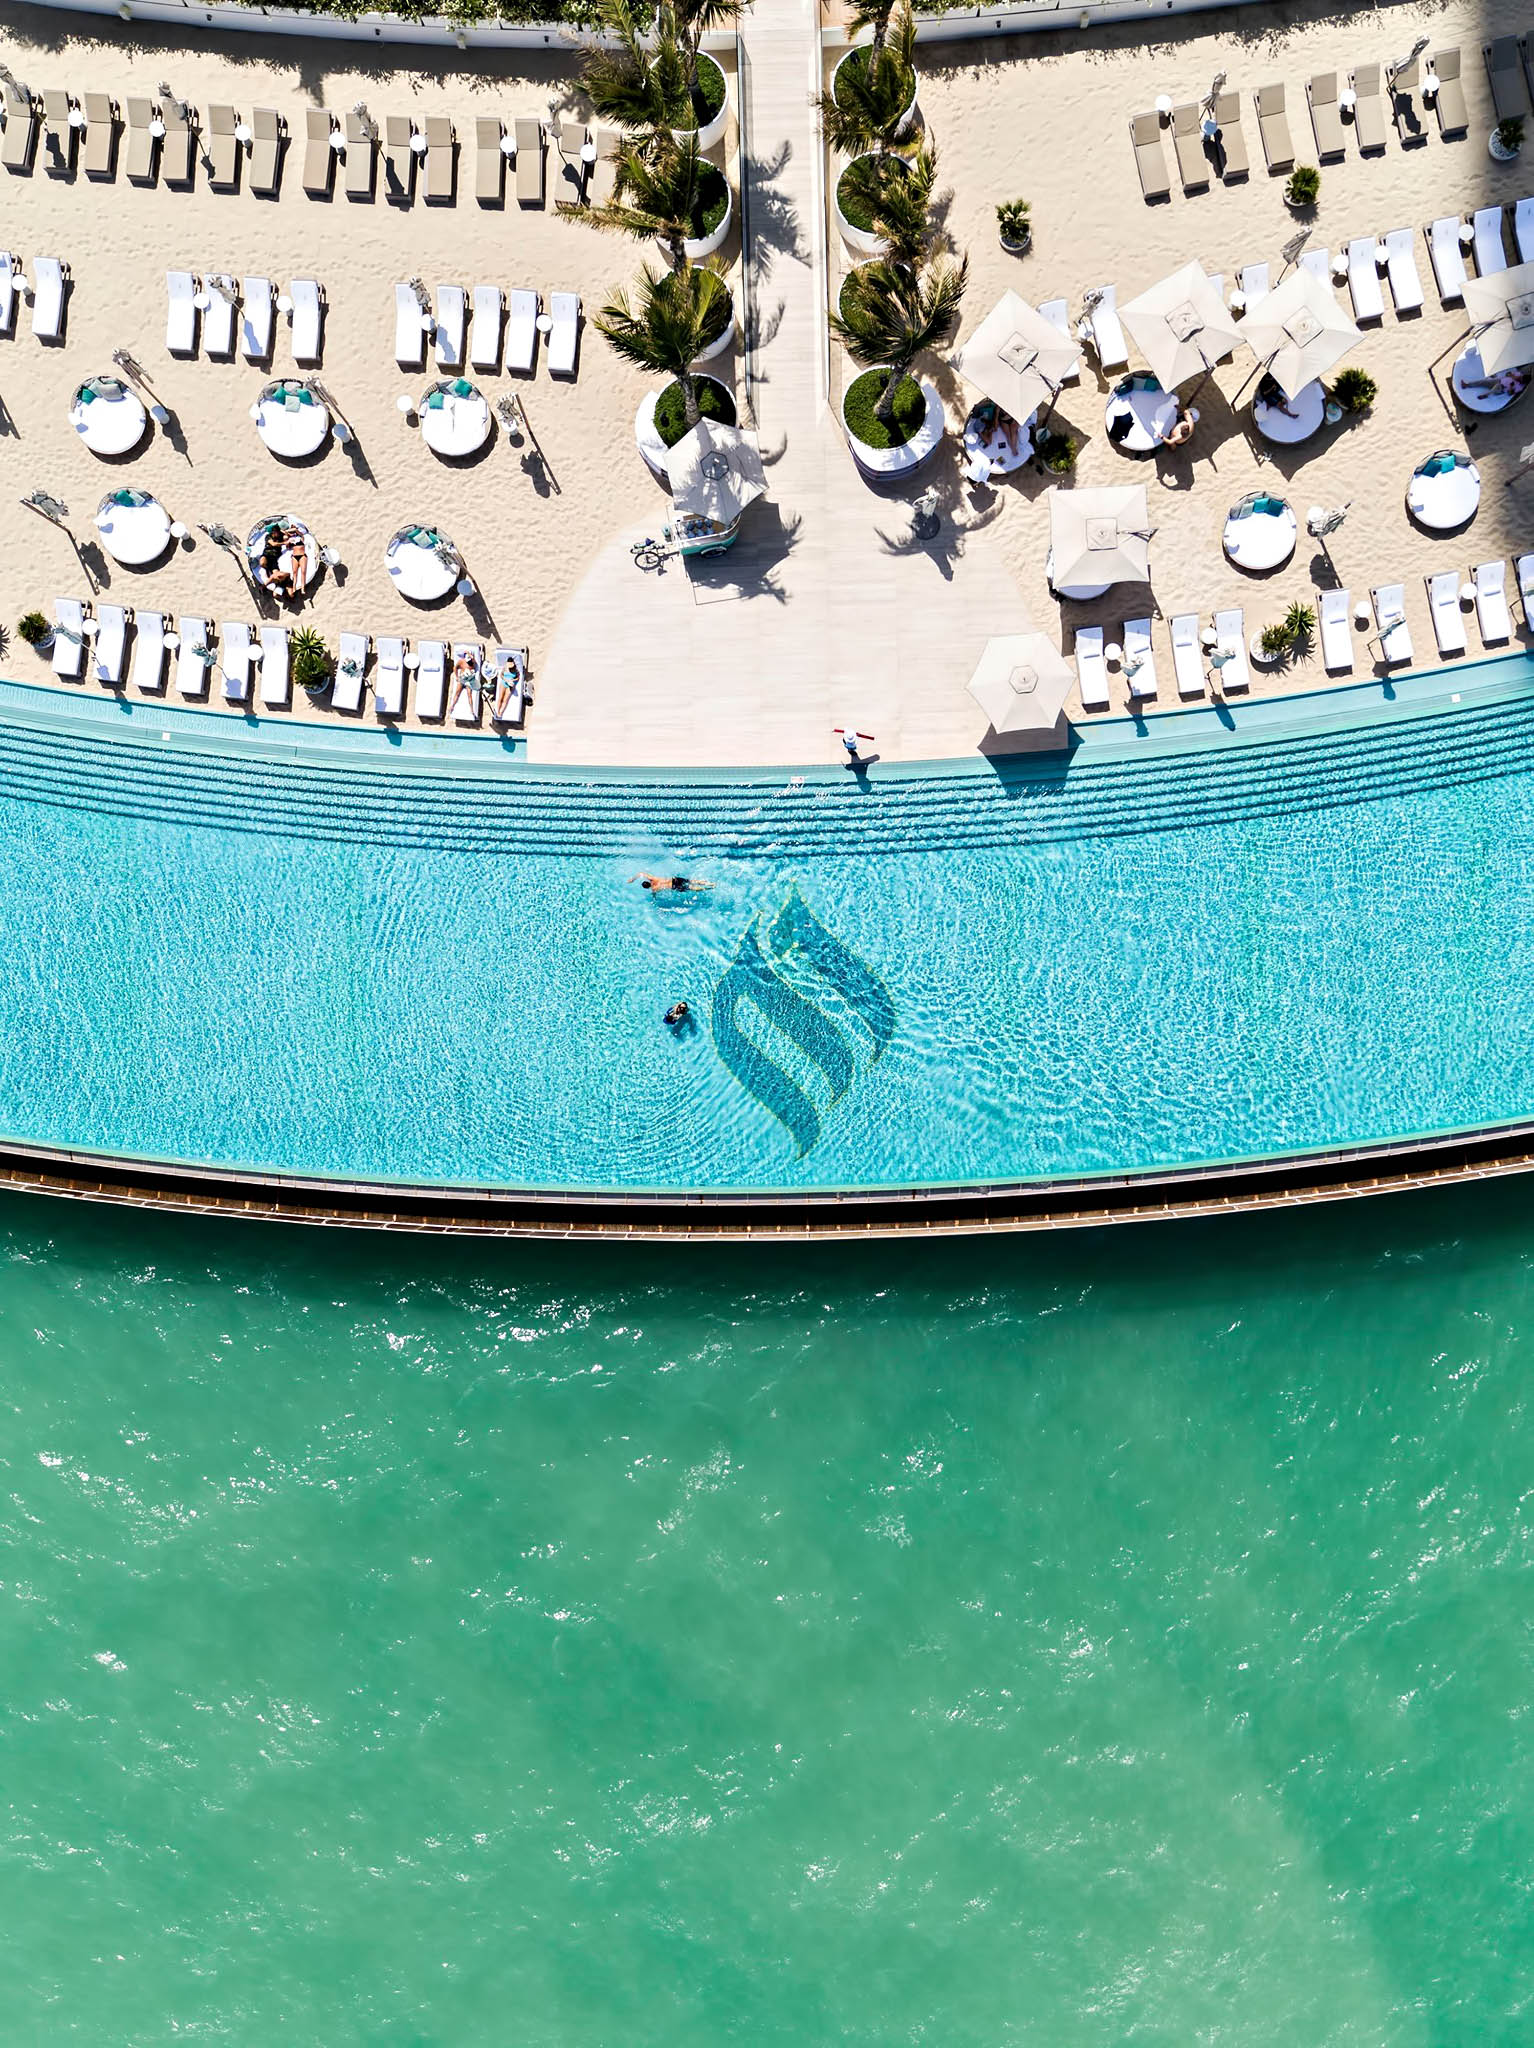 Burj Al Arab Jumeirah Hotel - Dubai, UAE - Infinity Pool Terrace Aerial